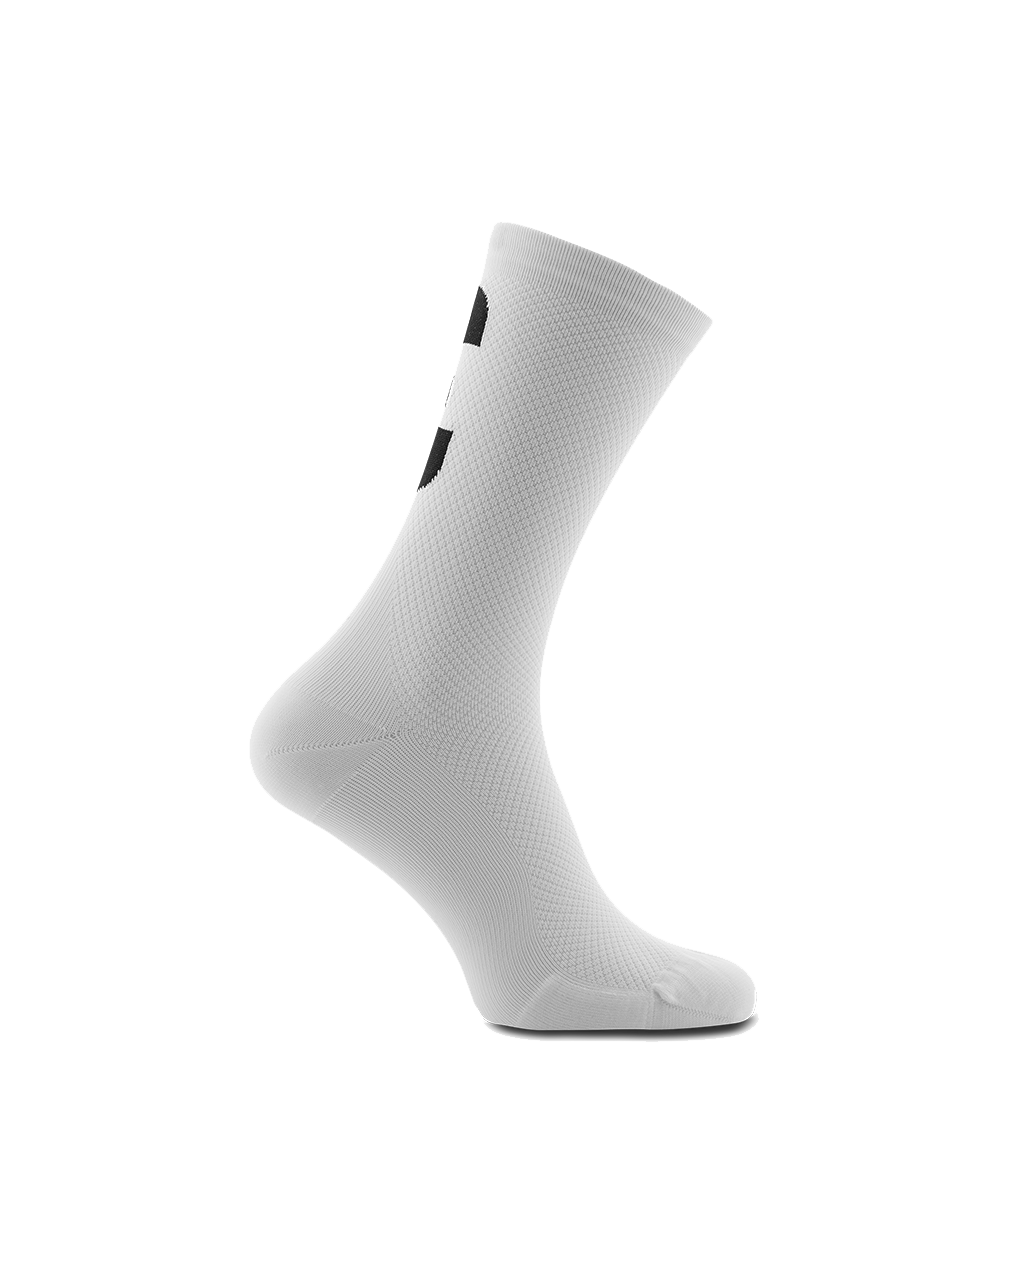 sockeloen-bib-number-13-cycling-socks